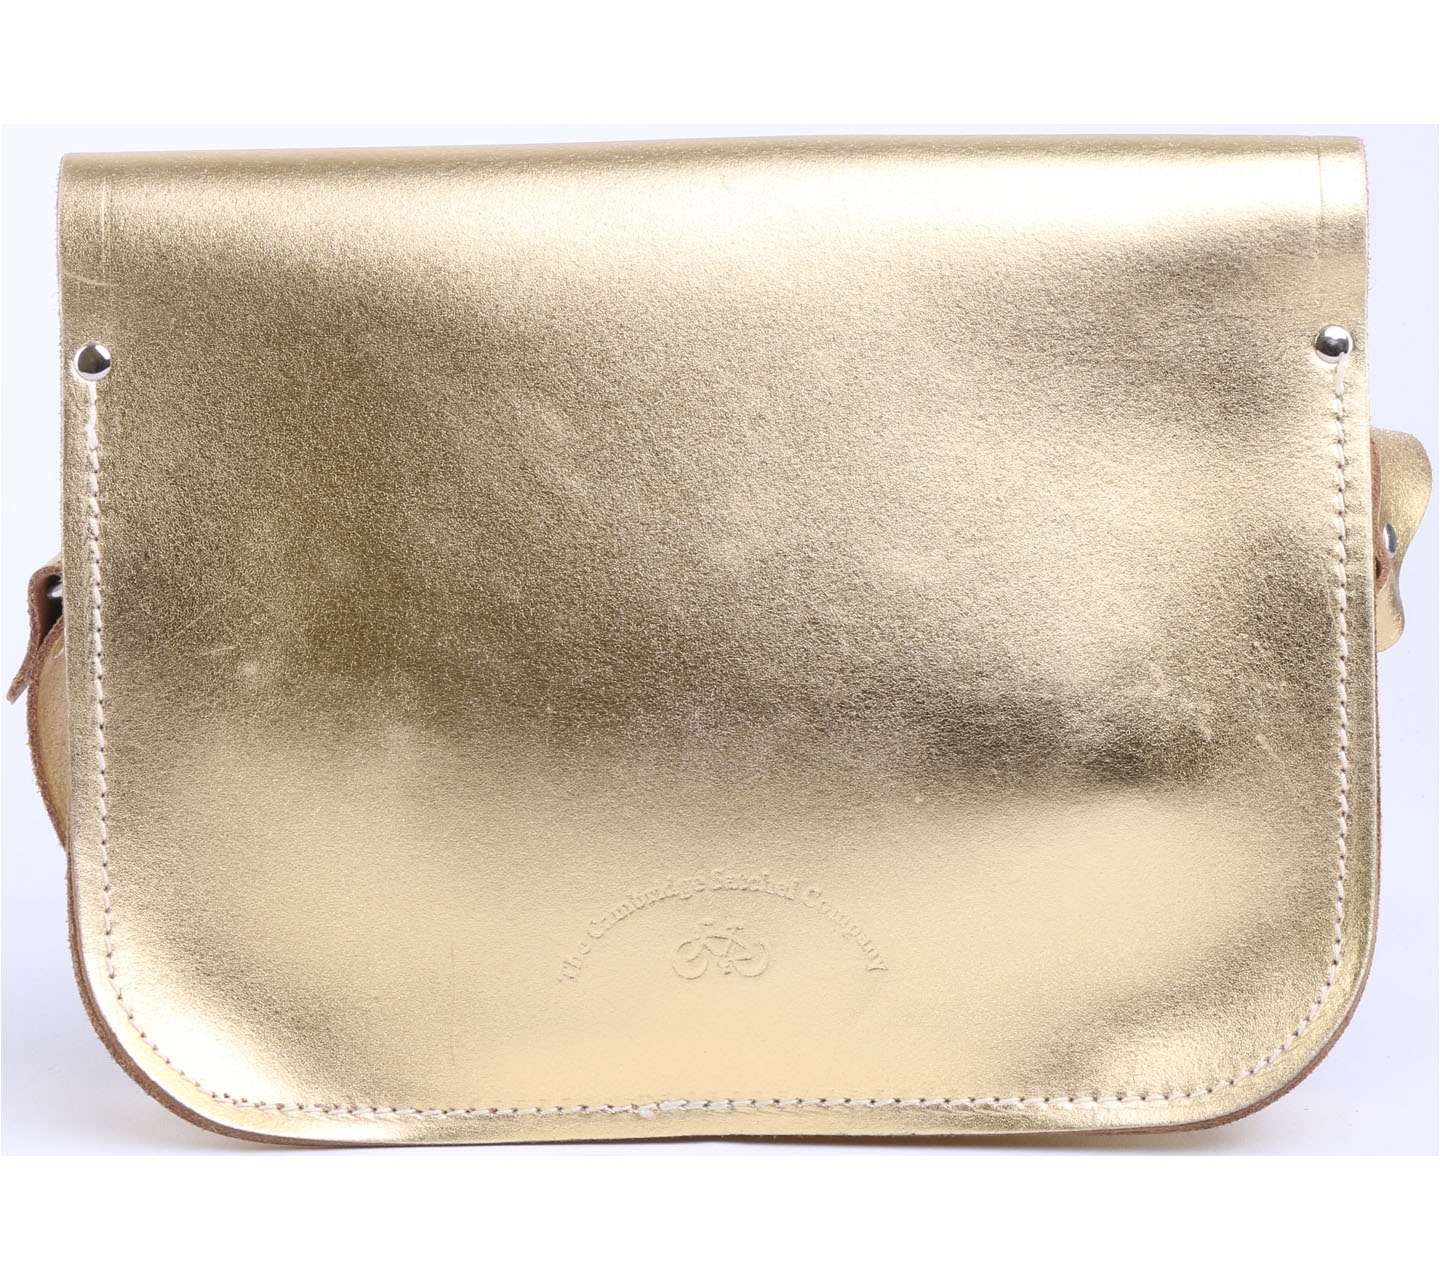 The Cambridge Satchel Company Gold Sling Bag